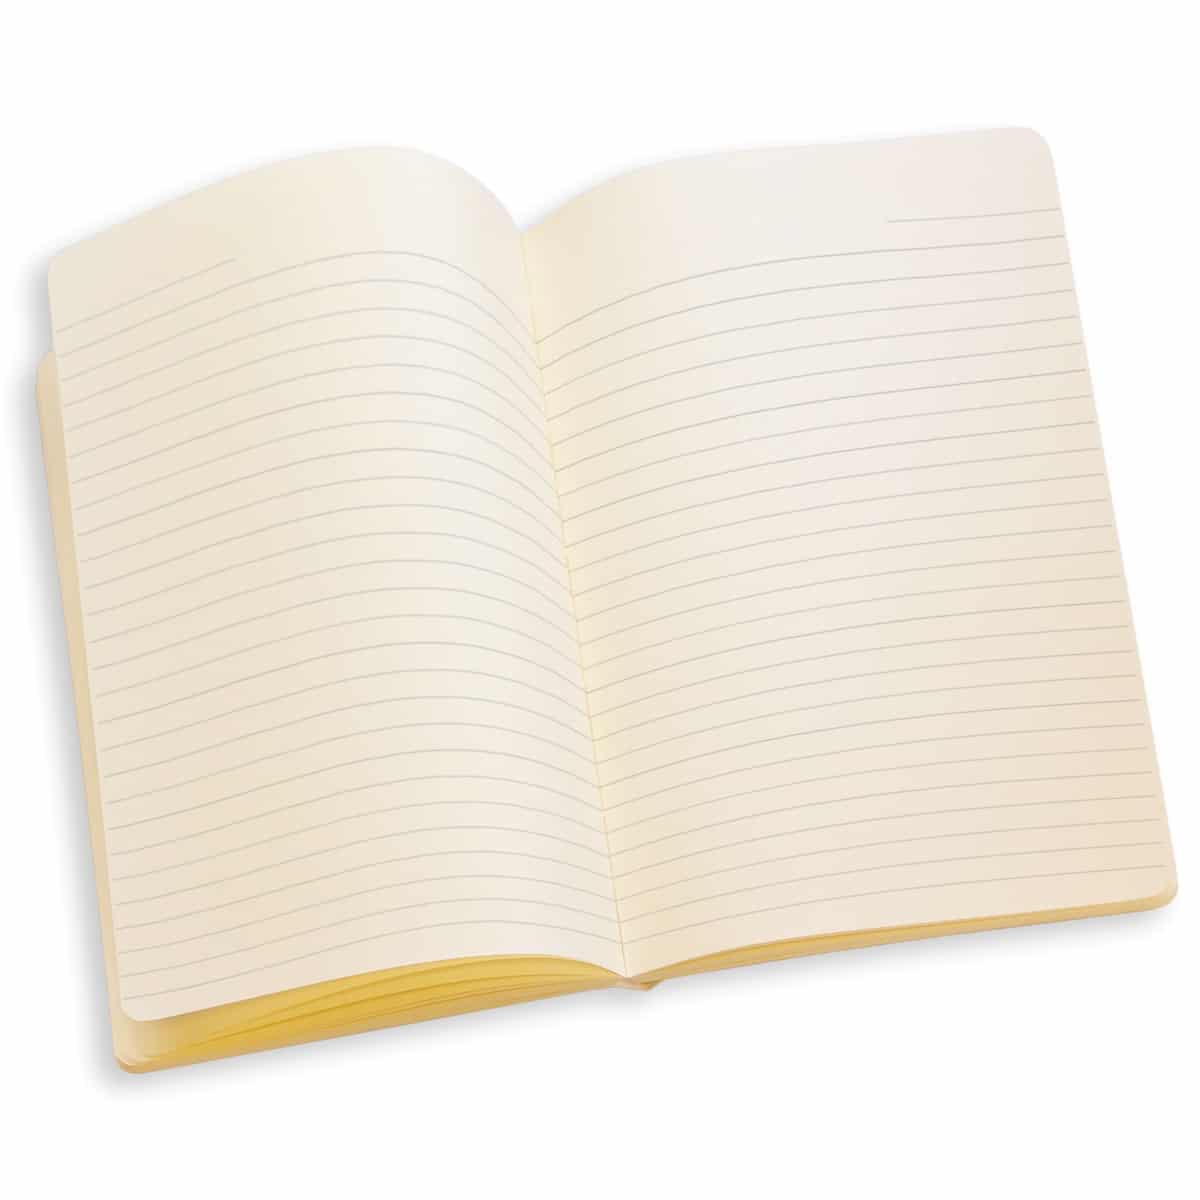 yoda notebook 5007593